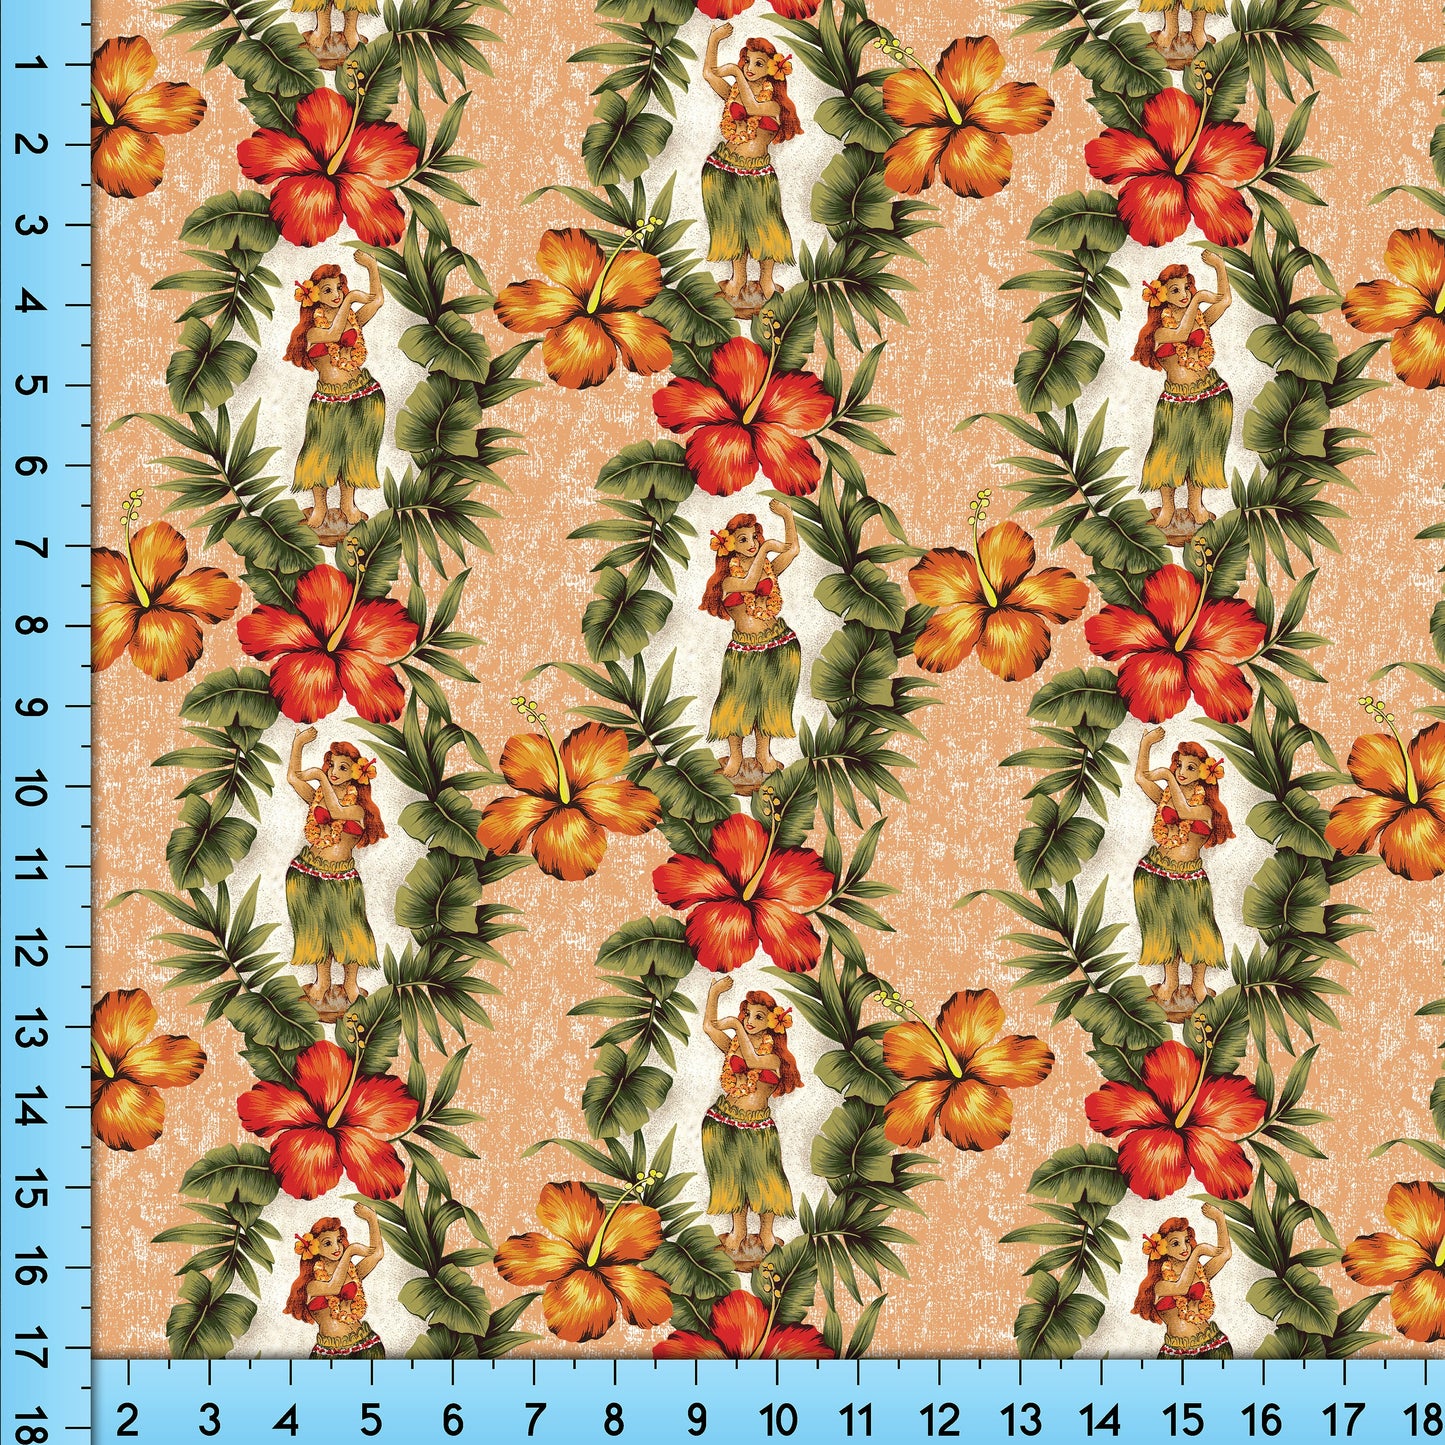 Hula Girl Hibiscus Flower Fabric, Tropical Hawaiian Shirt Floral Fabric Pattern By the Yard